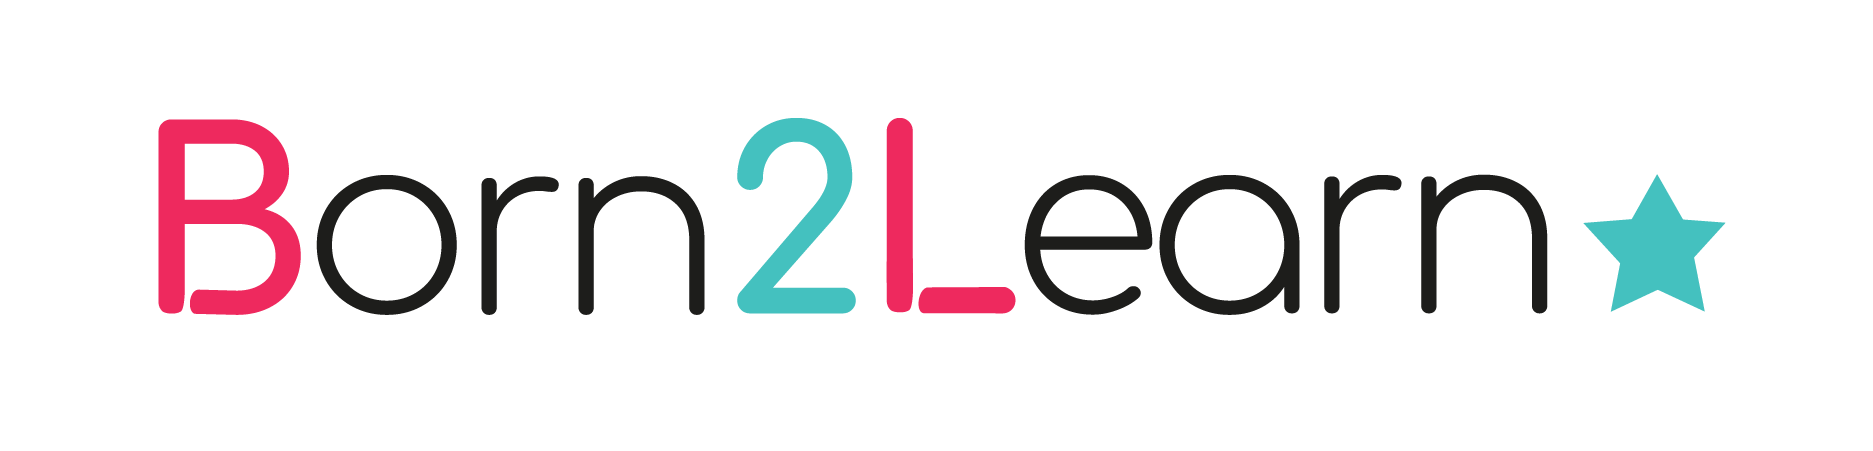 Born2Learn - formations de langues innovantes en ligne Icon